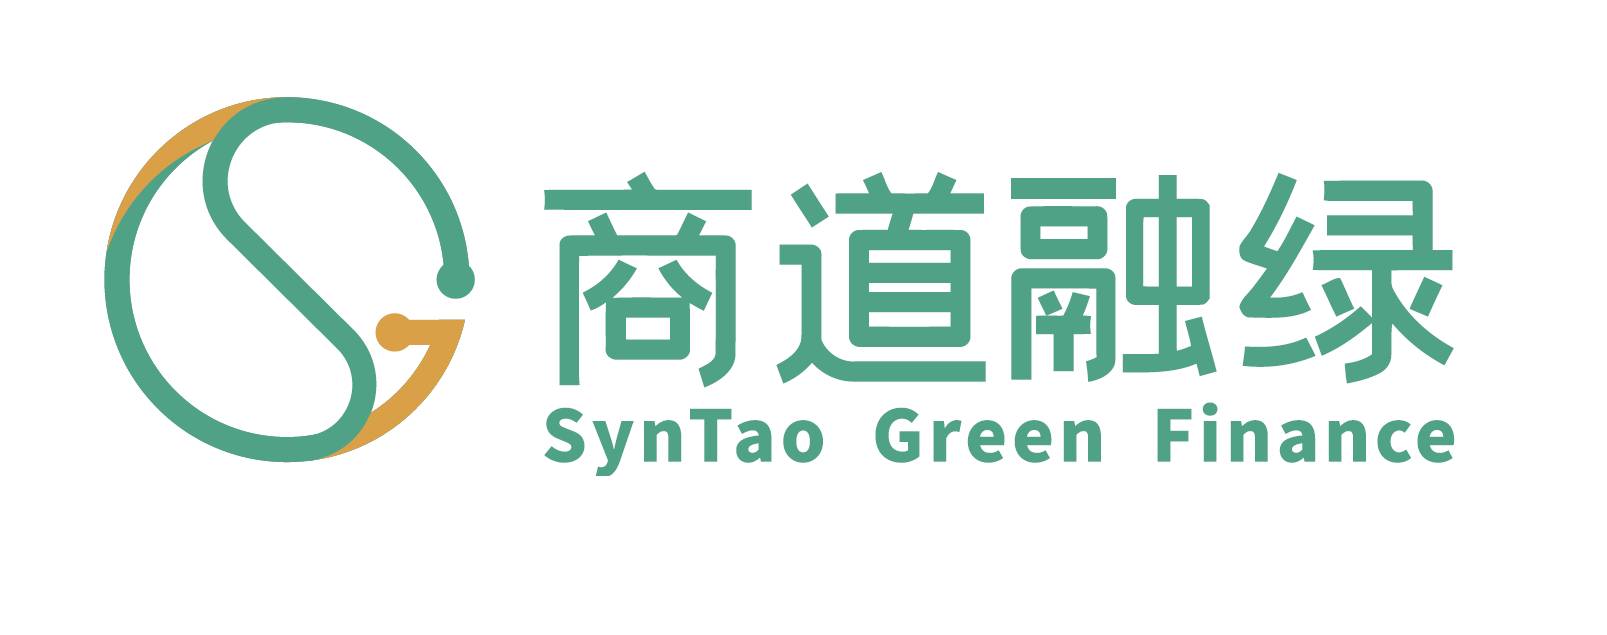 SynTao Green Finance